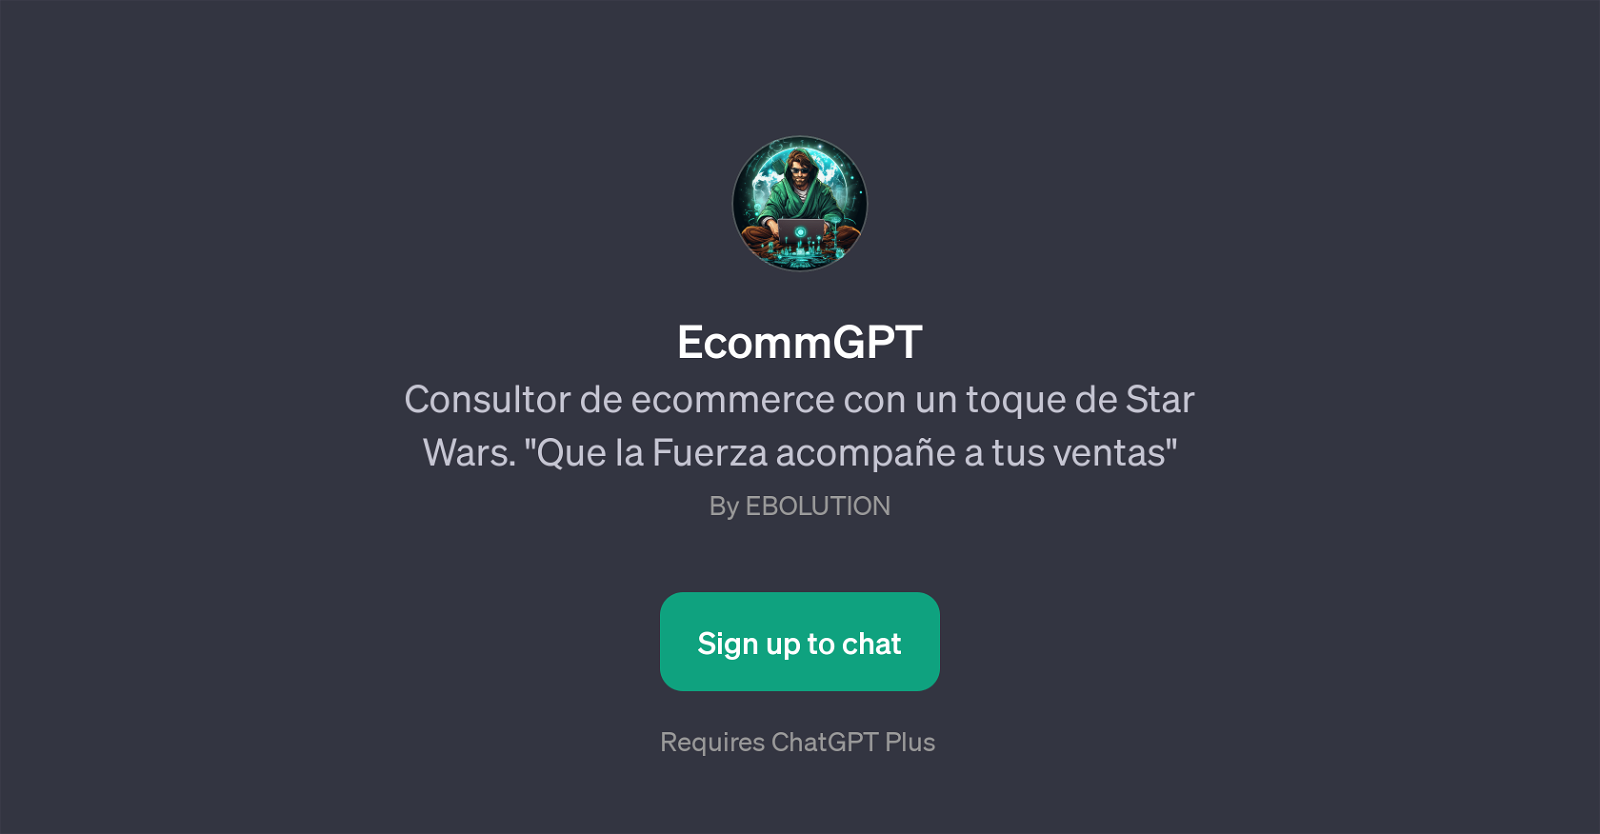 EcommGPT website